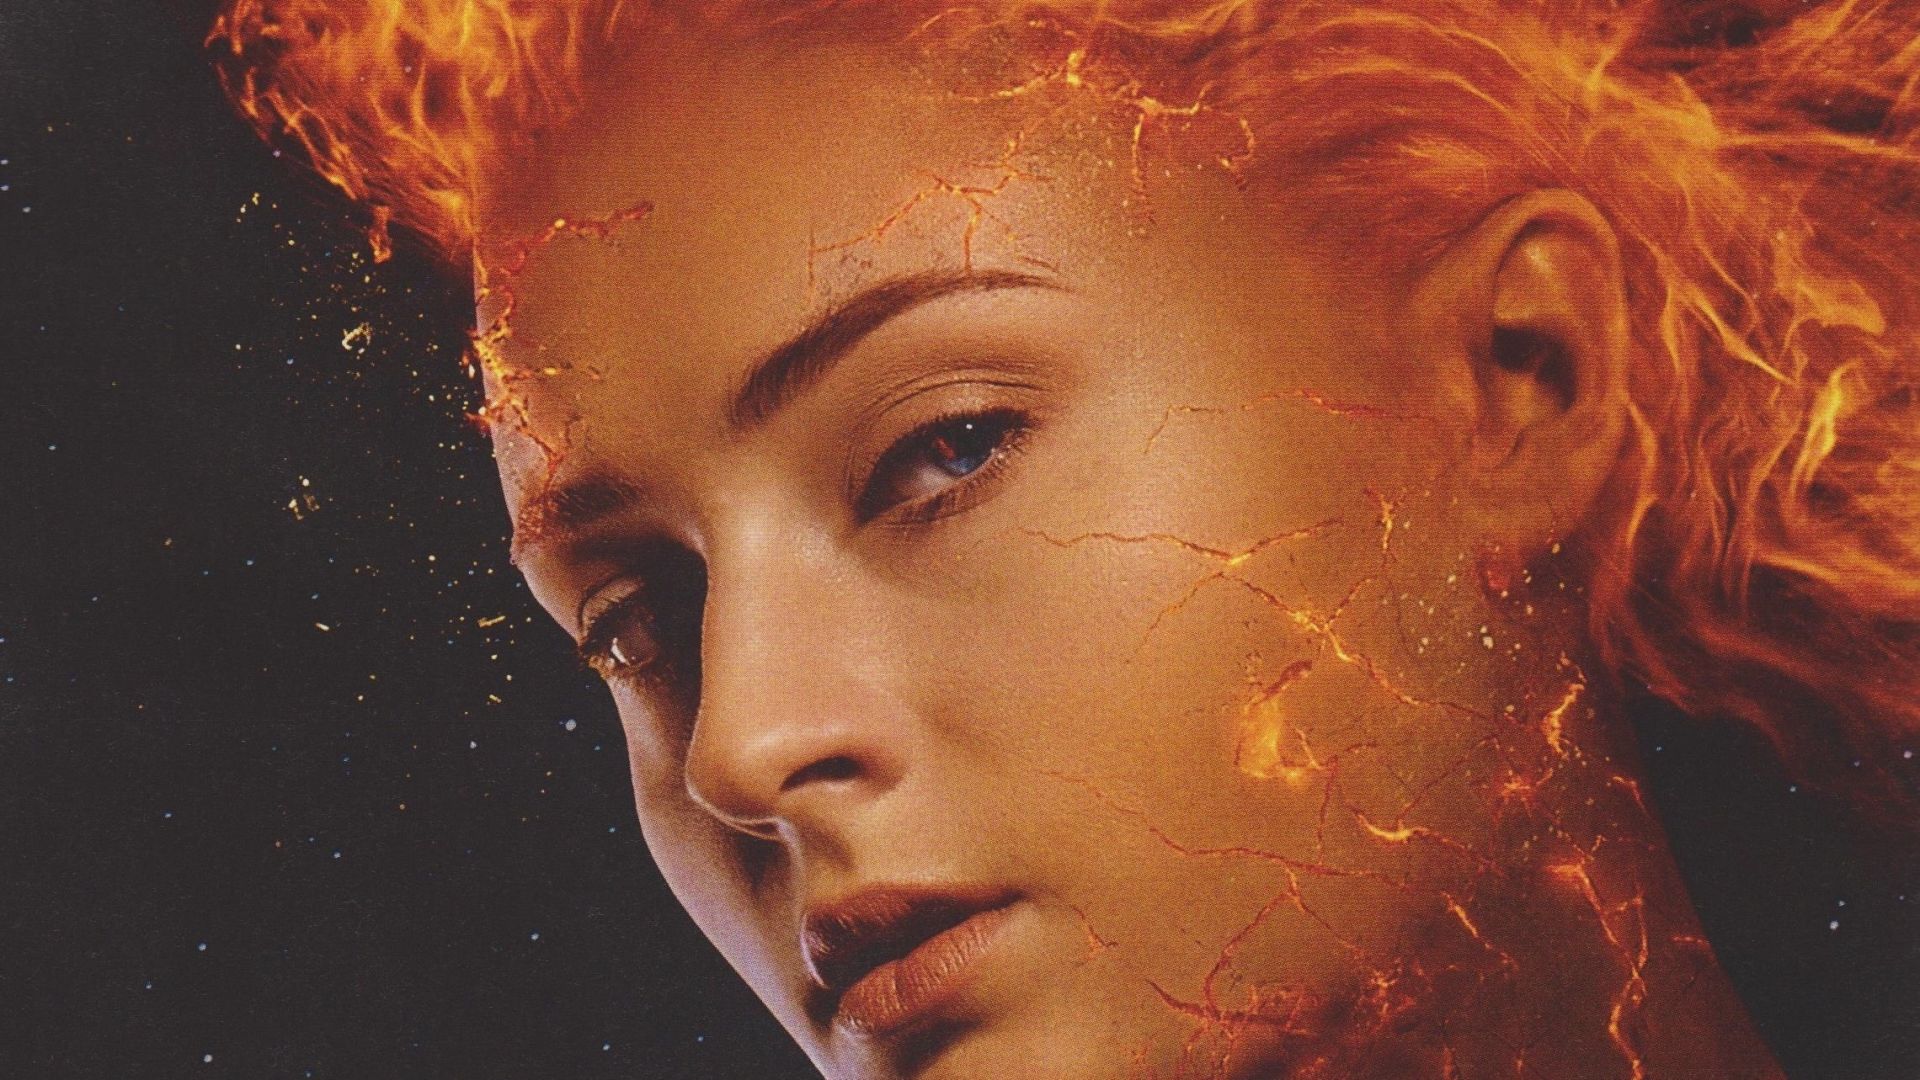 Wallpaper X-Men: Dark Phoenix, Sophie turner, movie, 2018